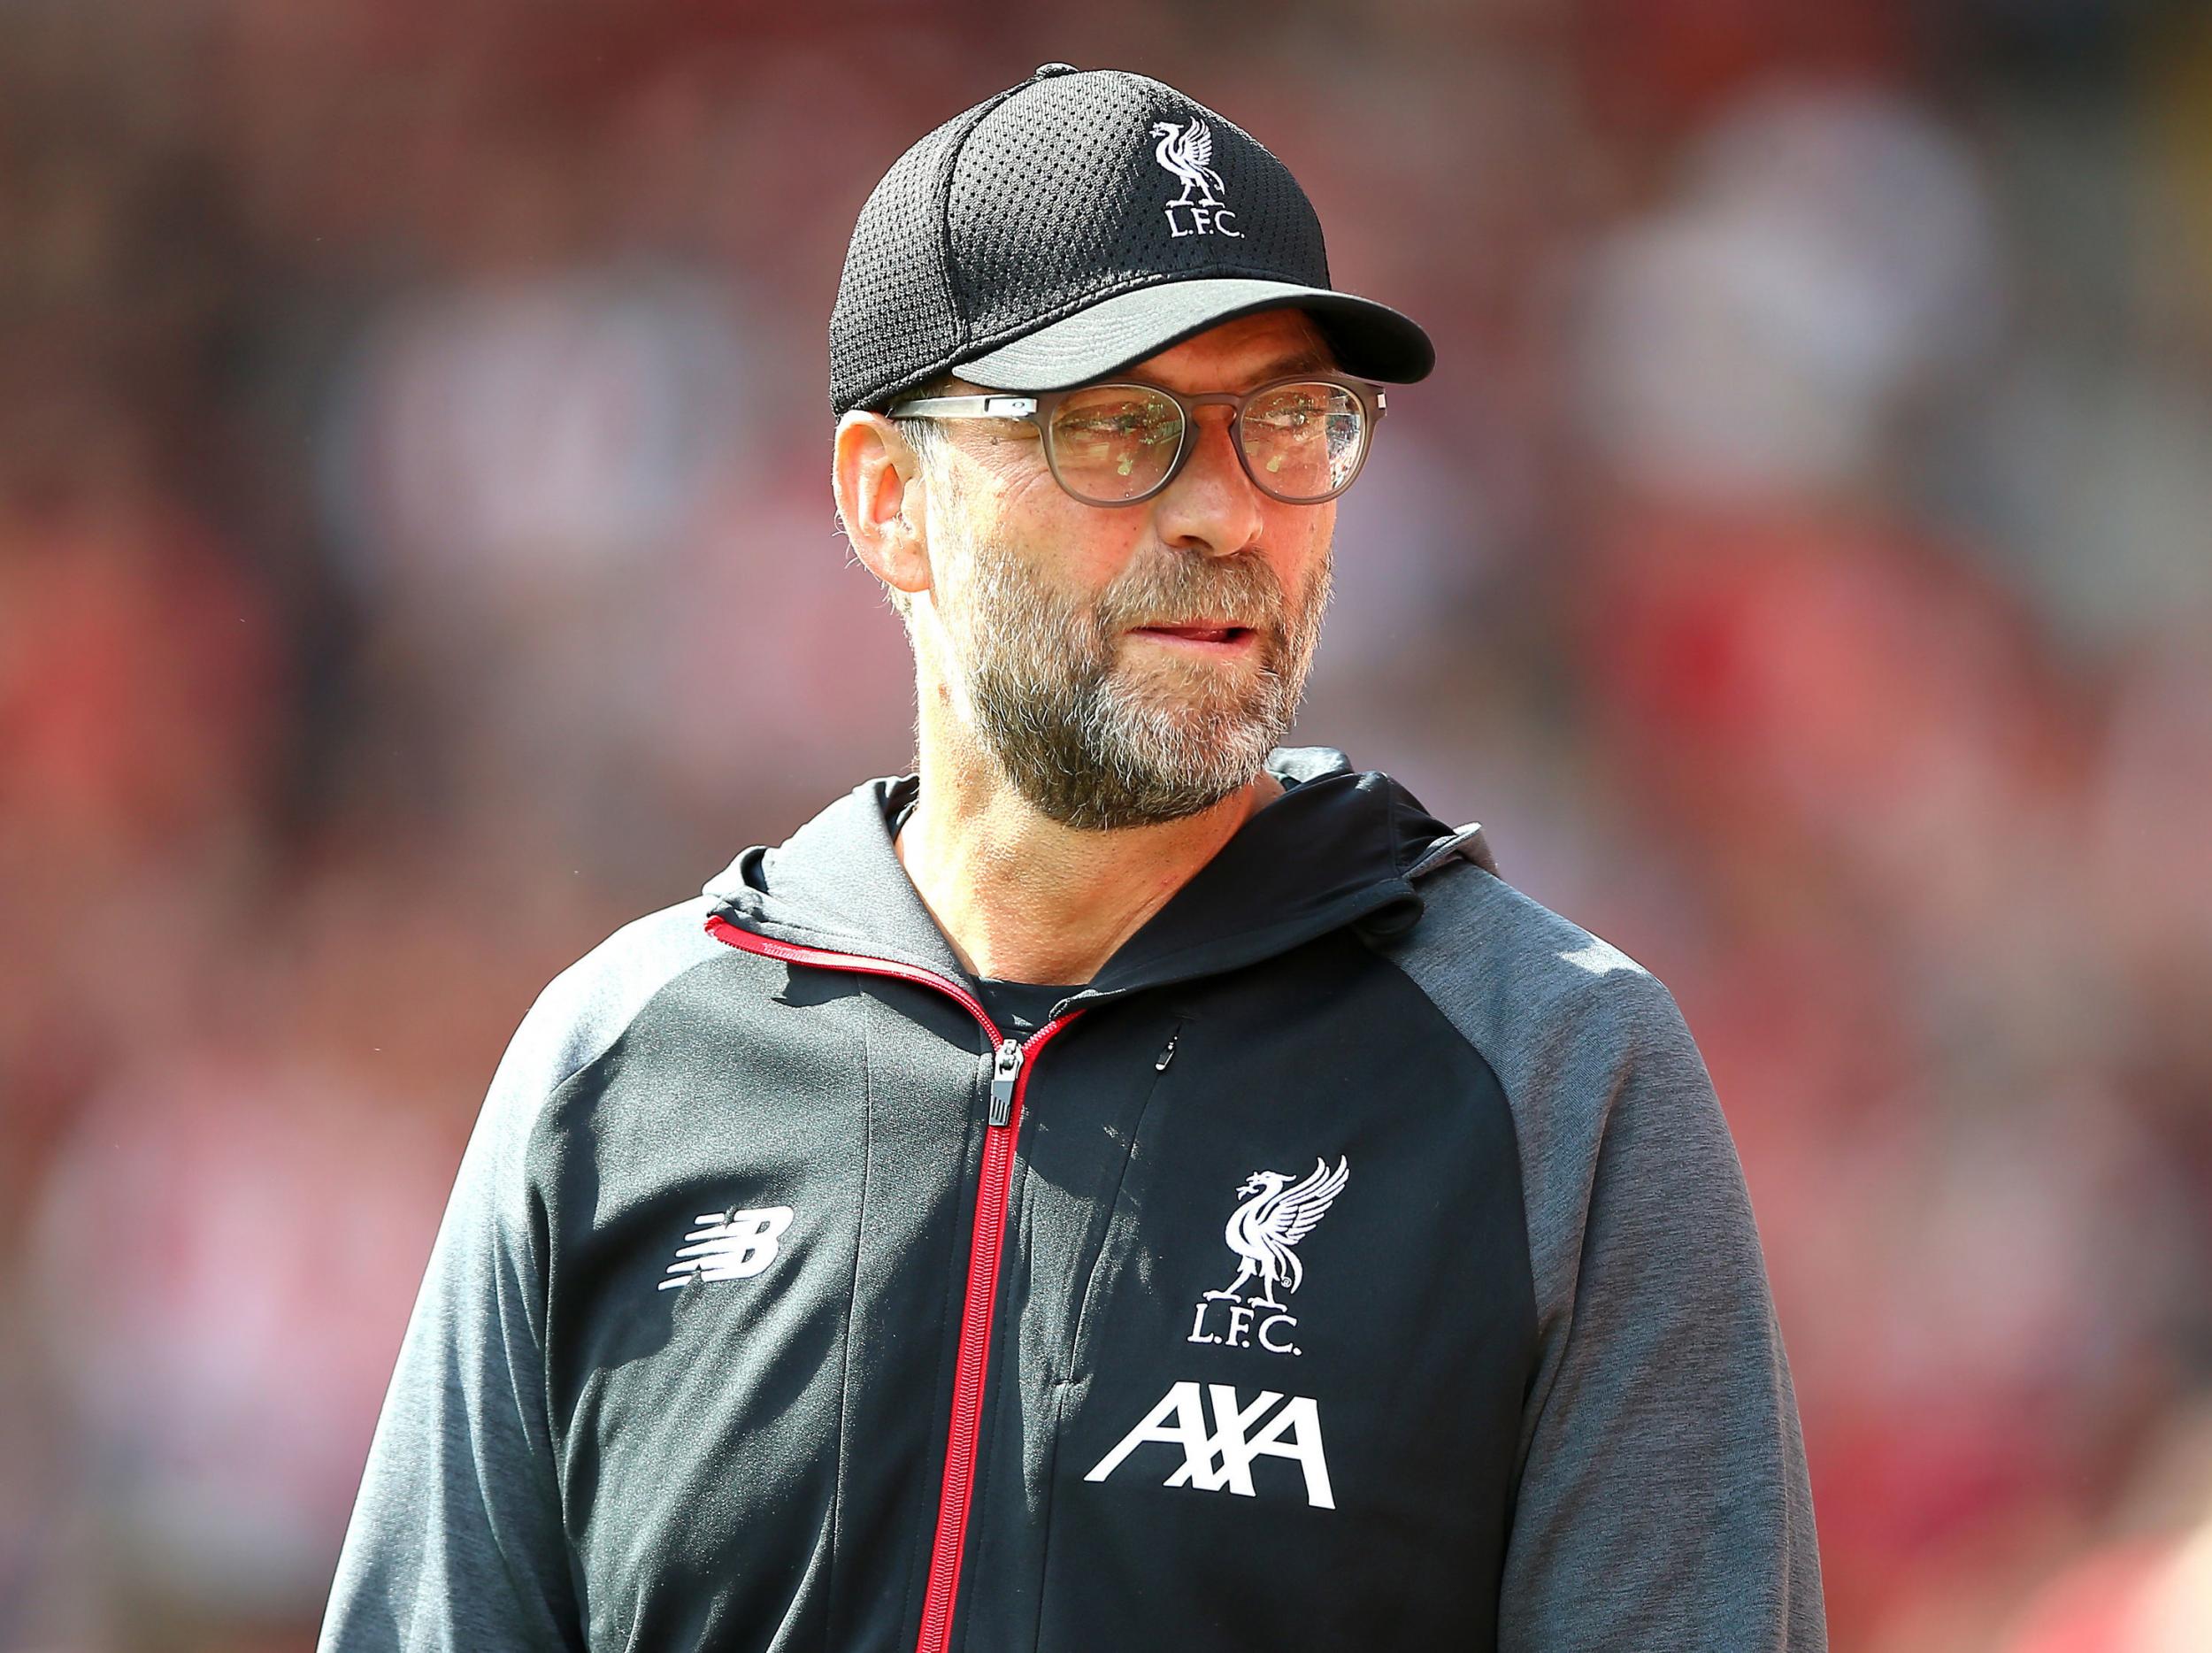 Liverpool manager Jurgen Klopp wants his team to improve